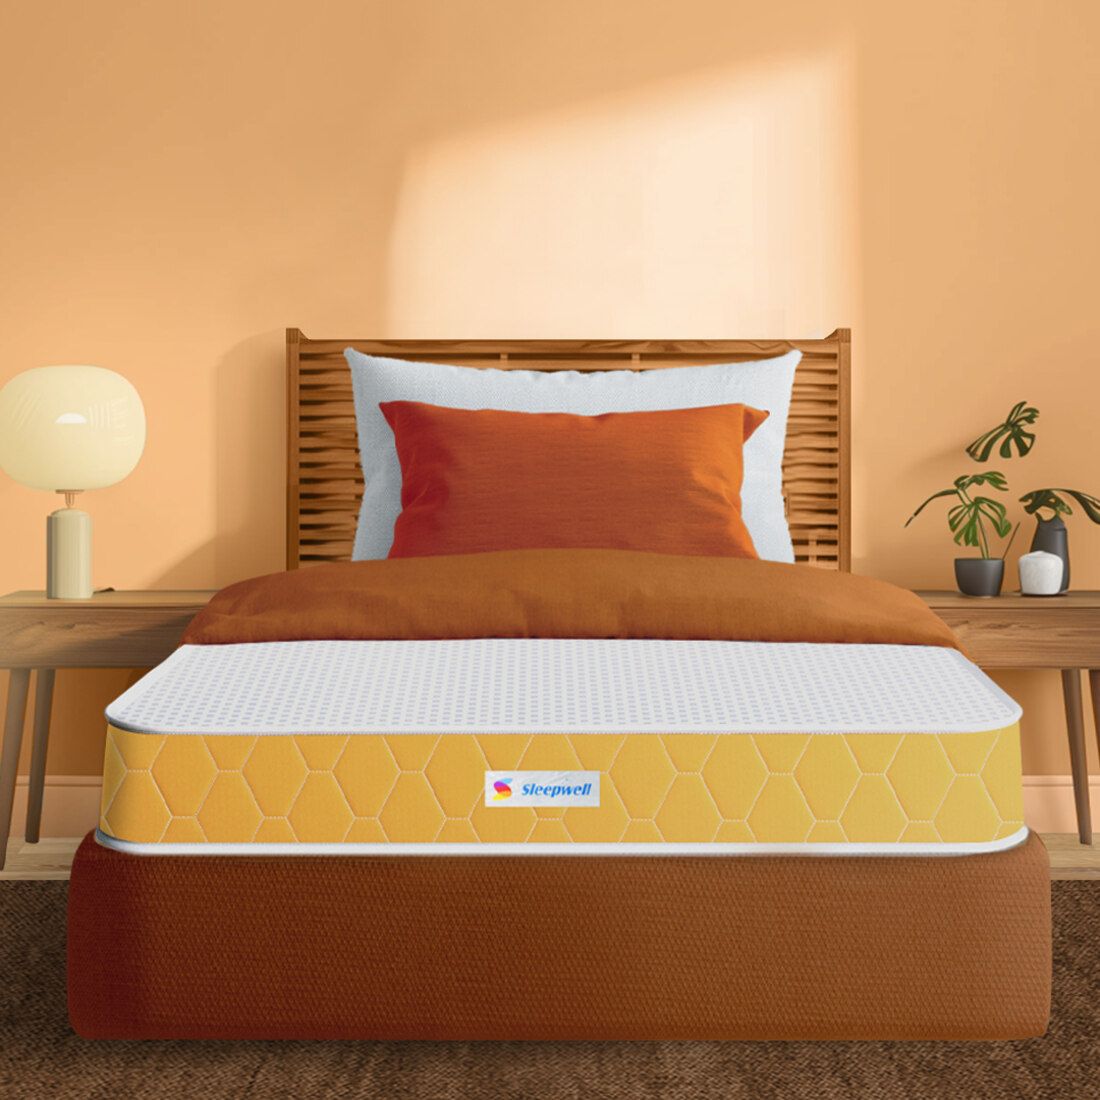 Sleepwell Dual Mattress | Reversible | High Density (HD) Foam | 8-inch Single Bed Size,?Medium Soft & Hard (Orange,78x42X8)